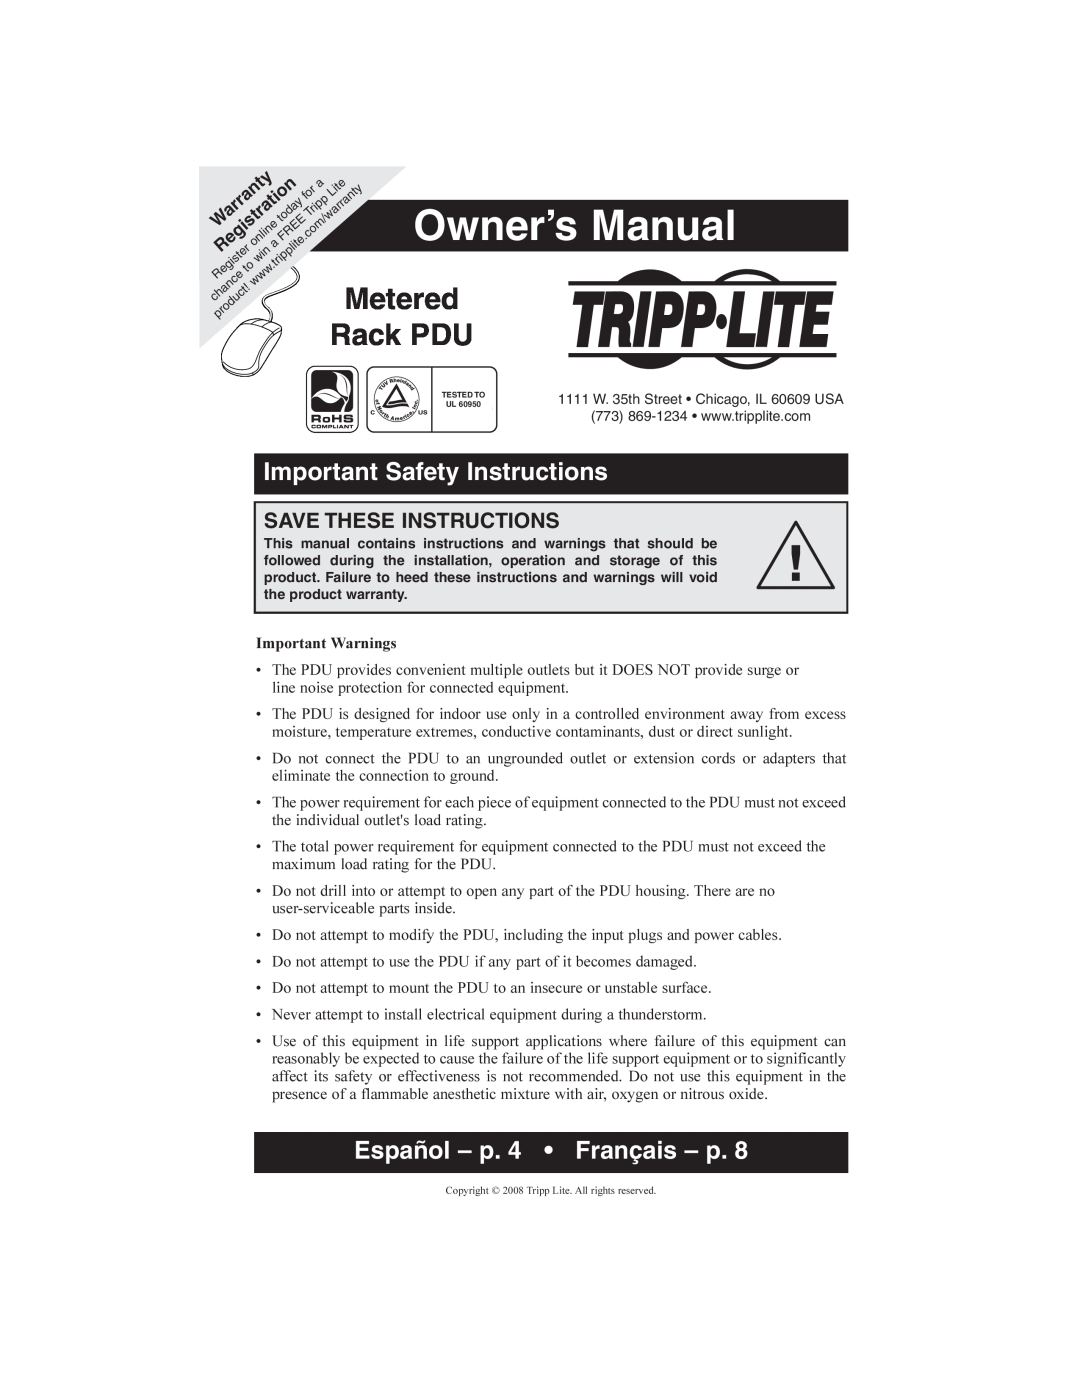 Tripp Lite Metered Rack PDU owner manual Important Safety Instructions, Español - p. 4 Français - p, Owner’s Manual 